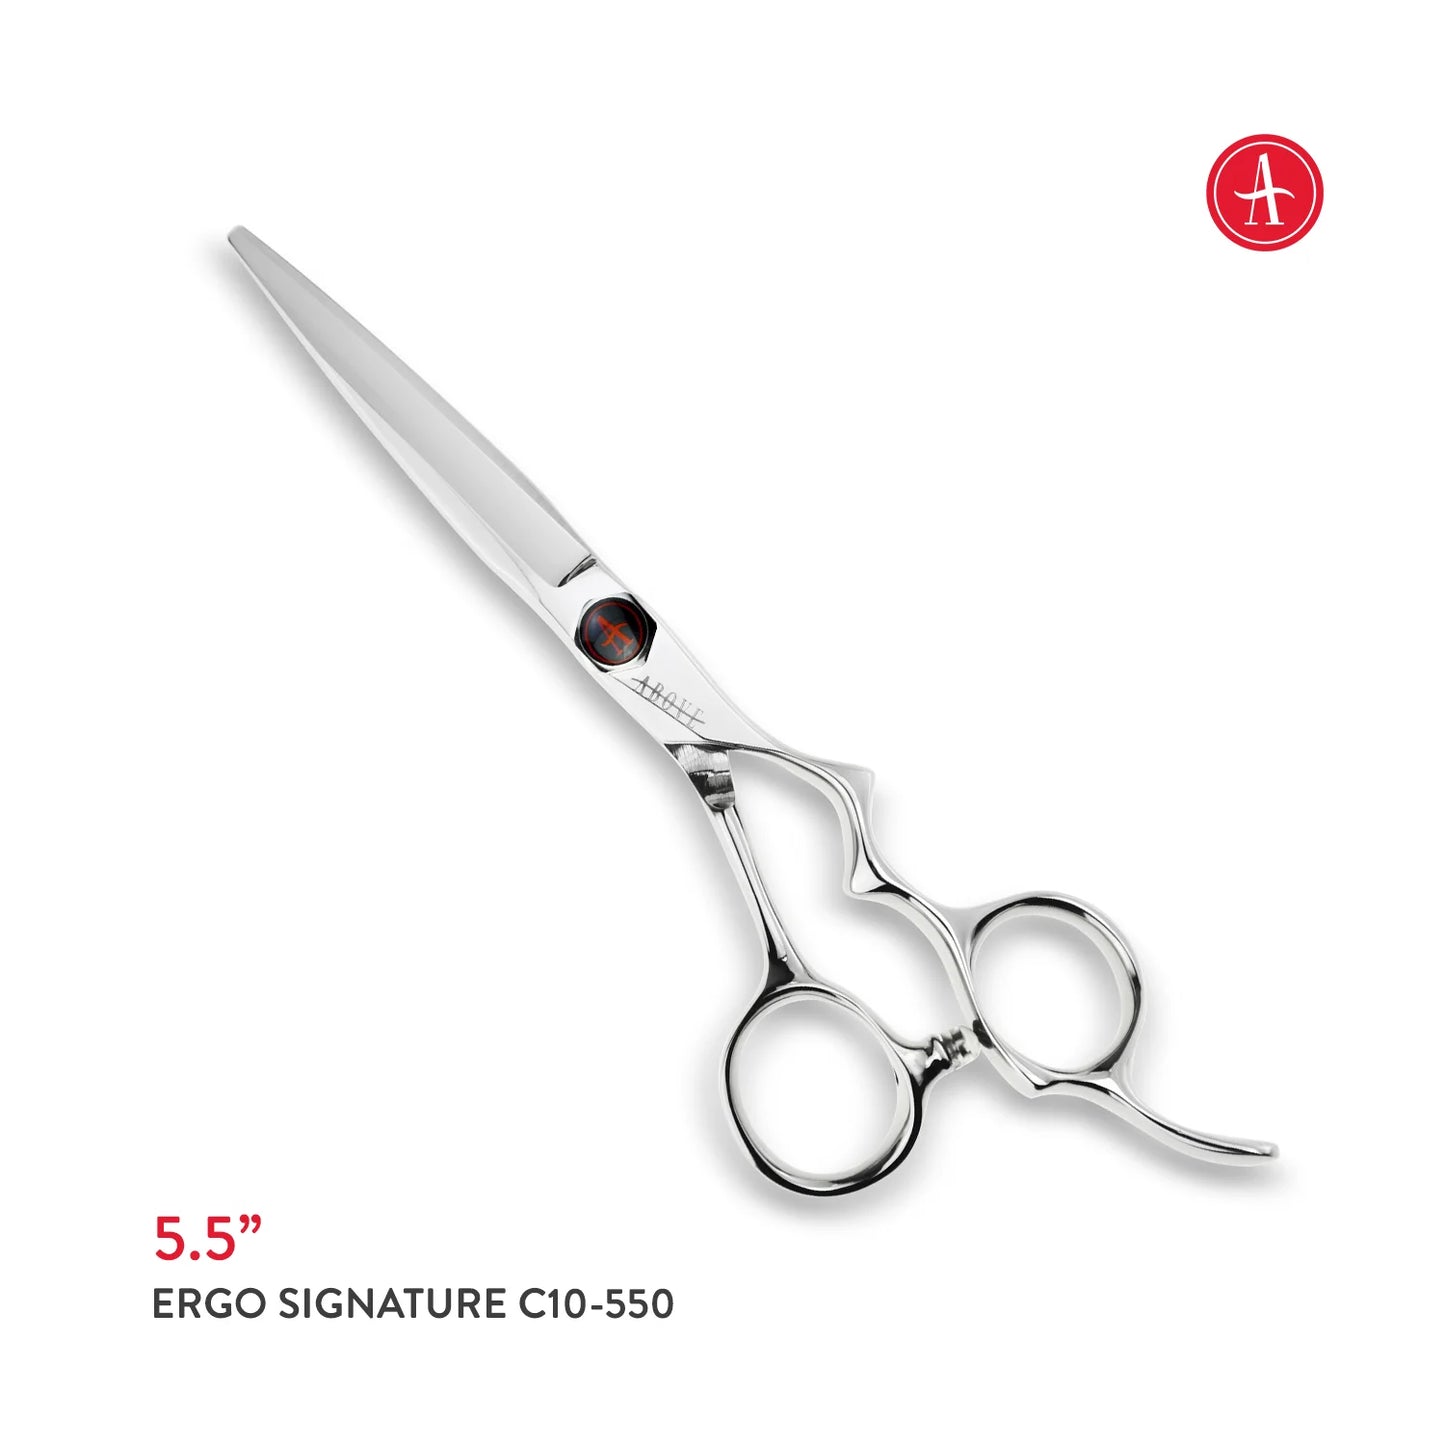 Above Ergo Signature Hair Cutting Shears – 5.5, 6.0, 6.5, 7.0